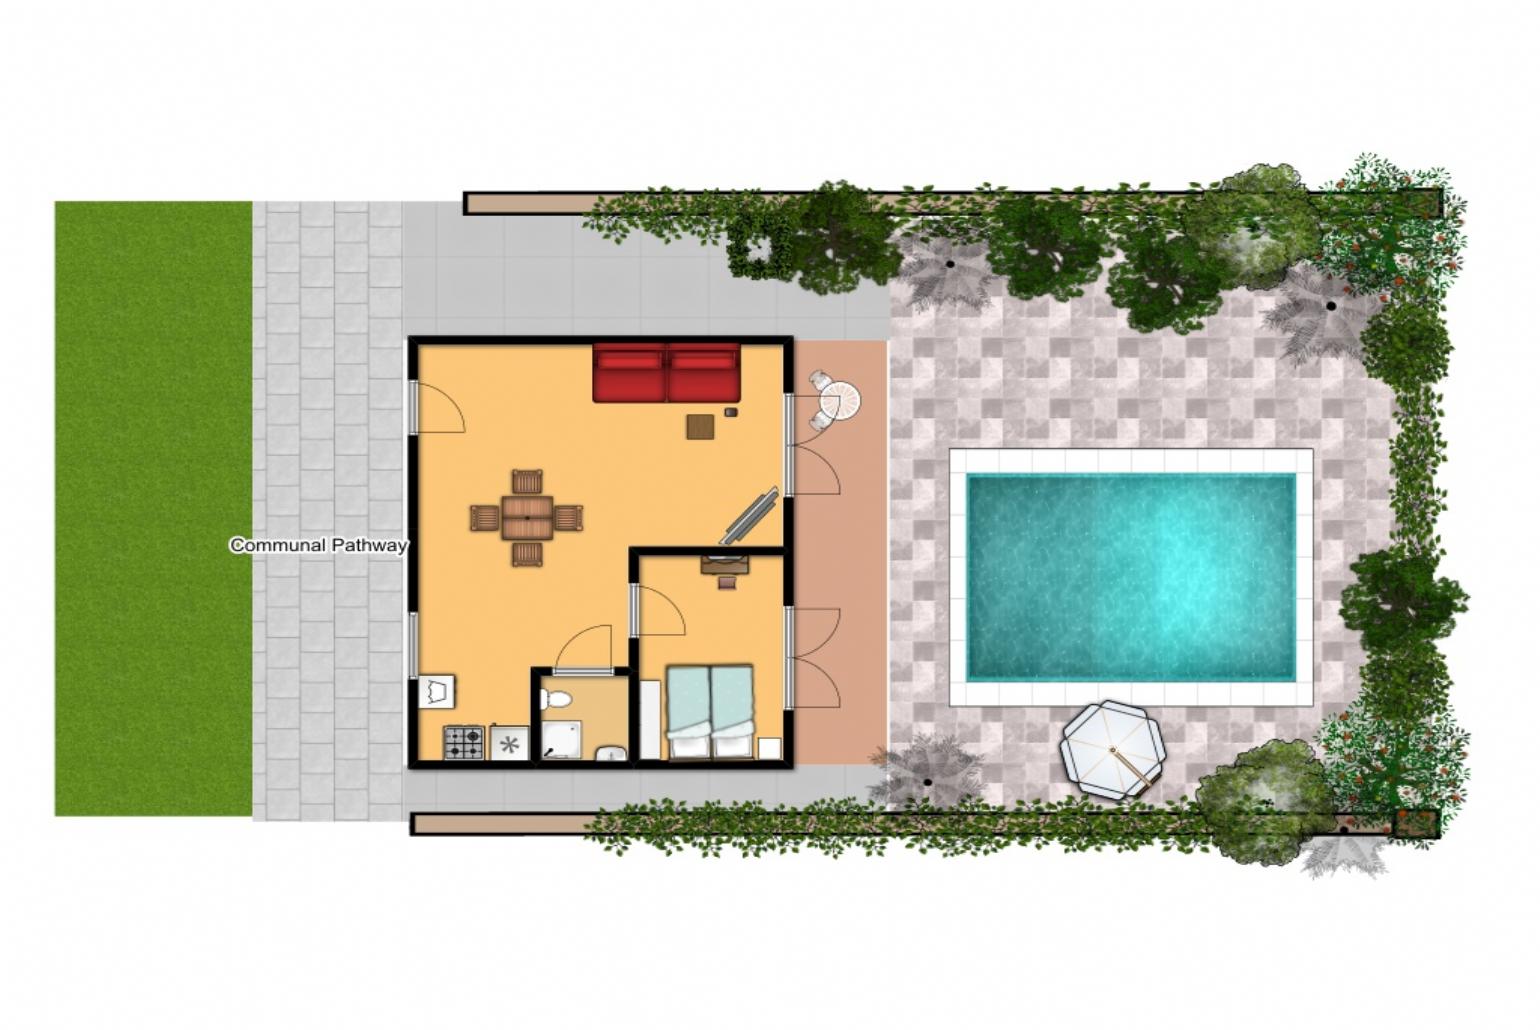 Floor plan of the villa